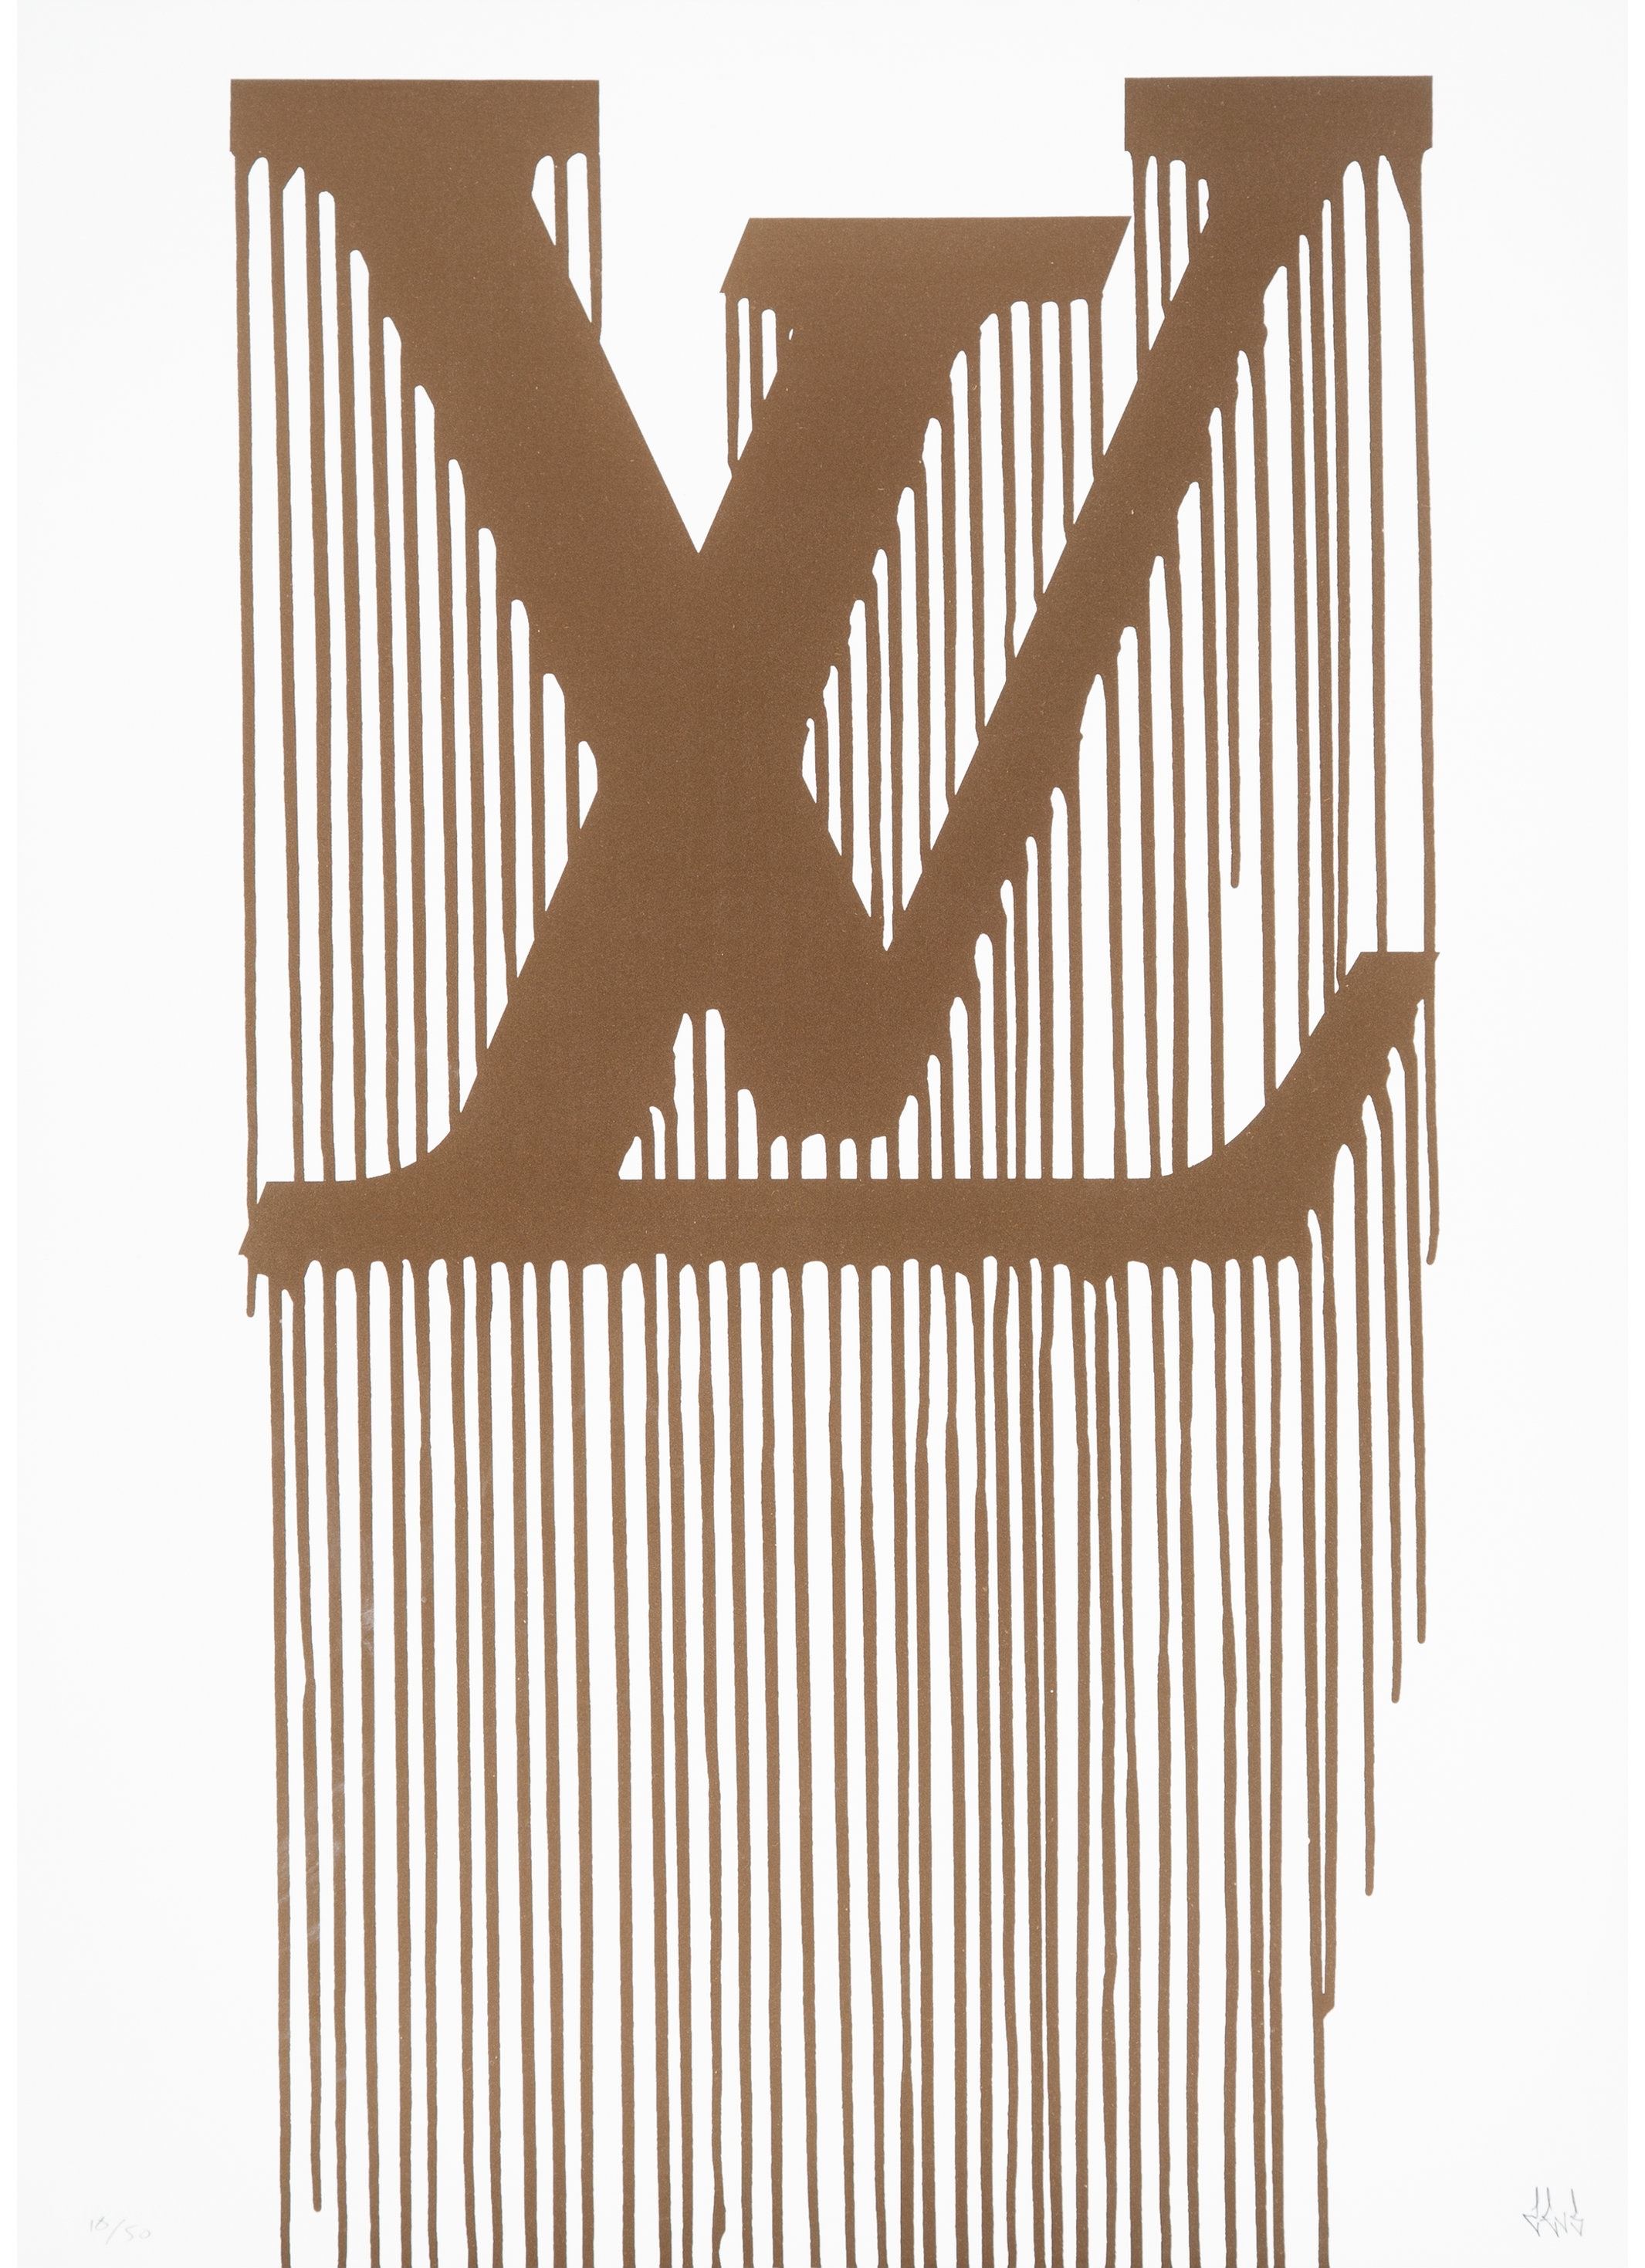 Zevs (b. 1977). Liquidated Louis Vuitton (Multicolore), 2011., Lot #11133